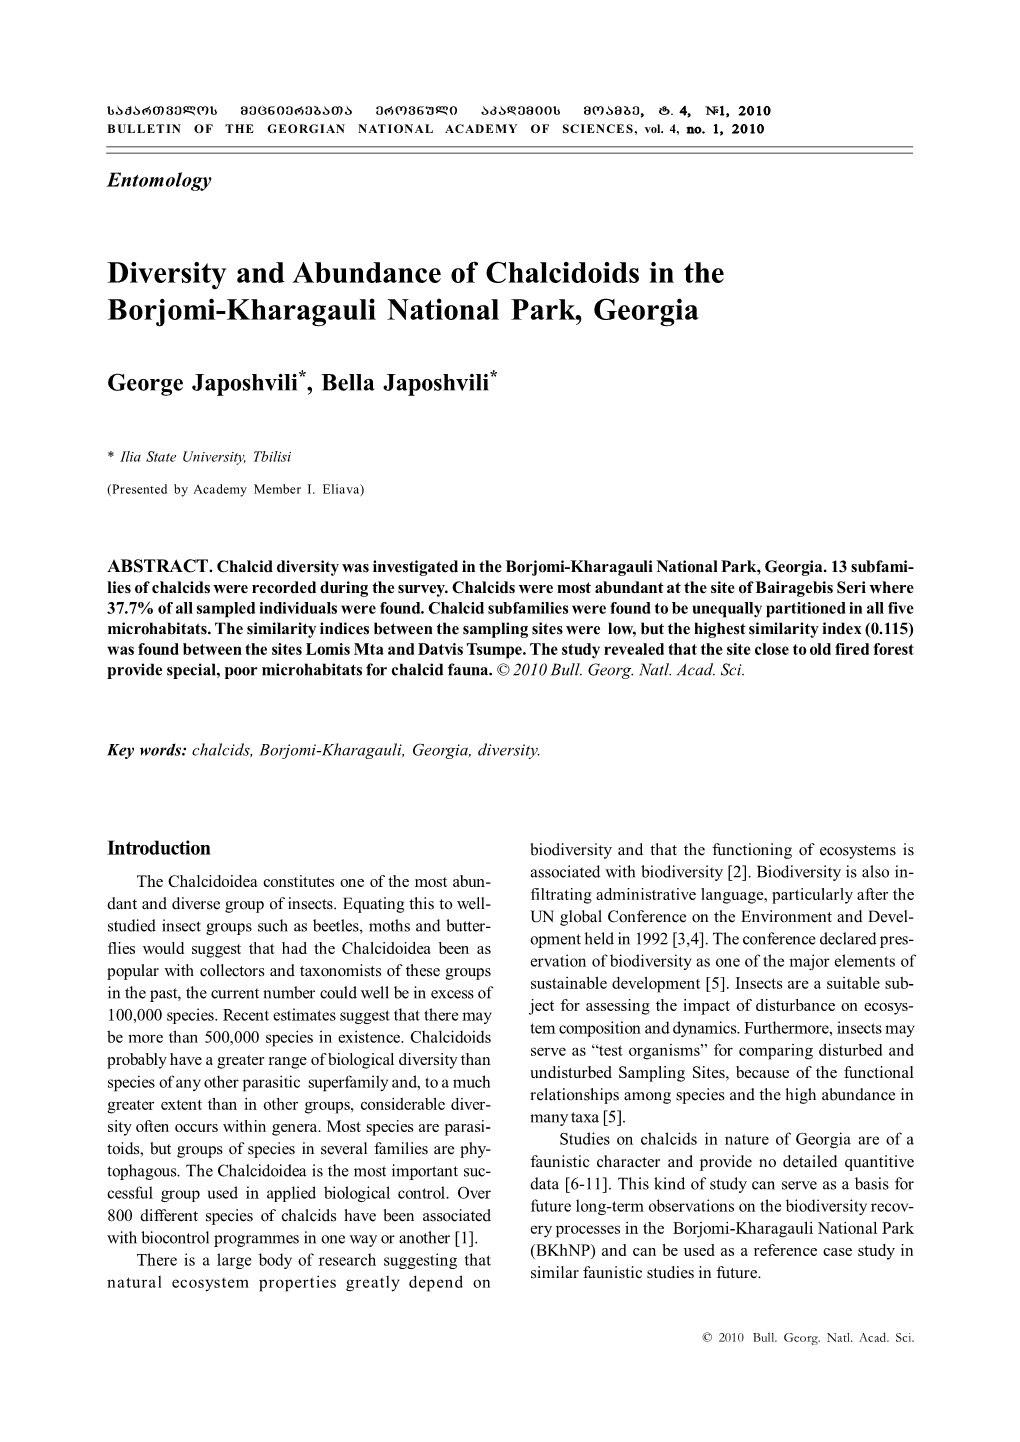 Diversity and Abundance of Chalcidoids in the Borjomi-Kharagauli National Park, Georgia